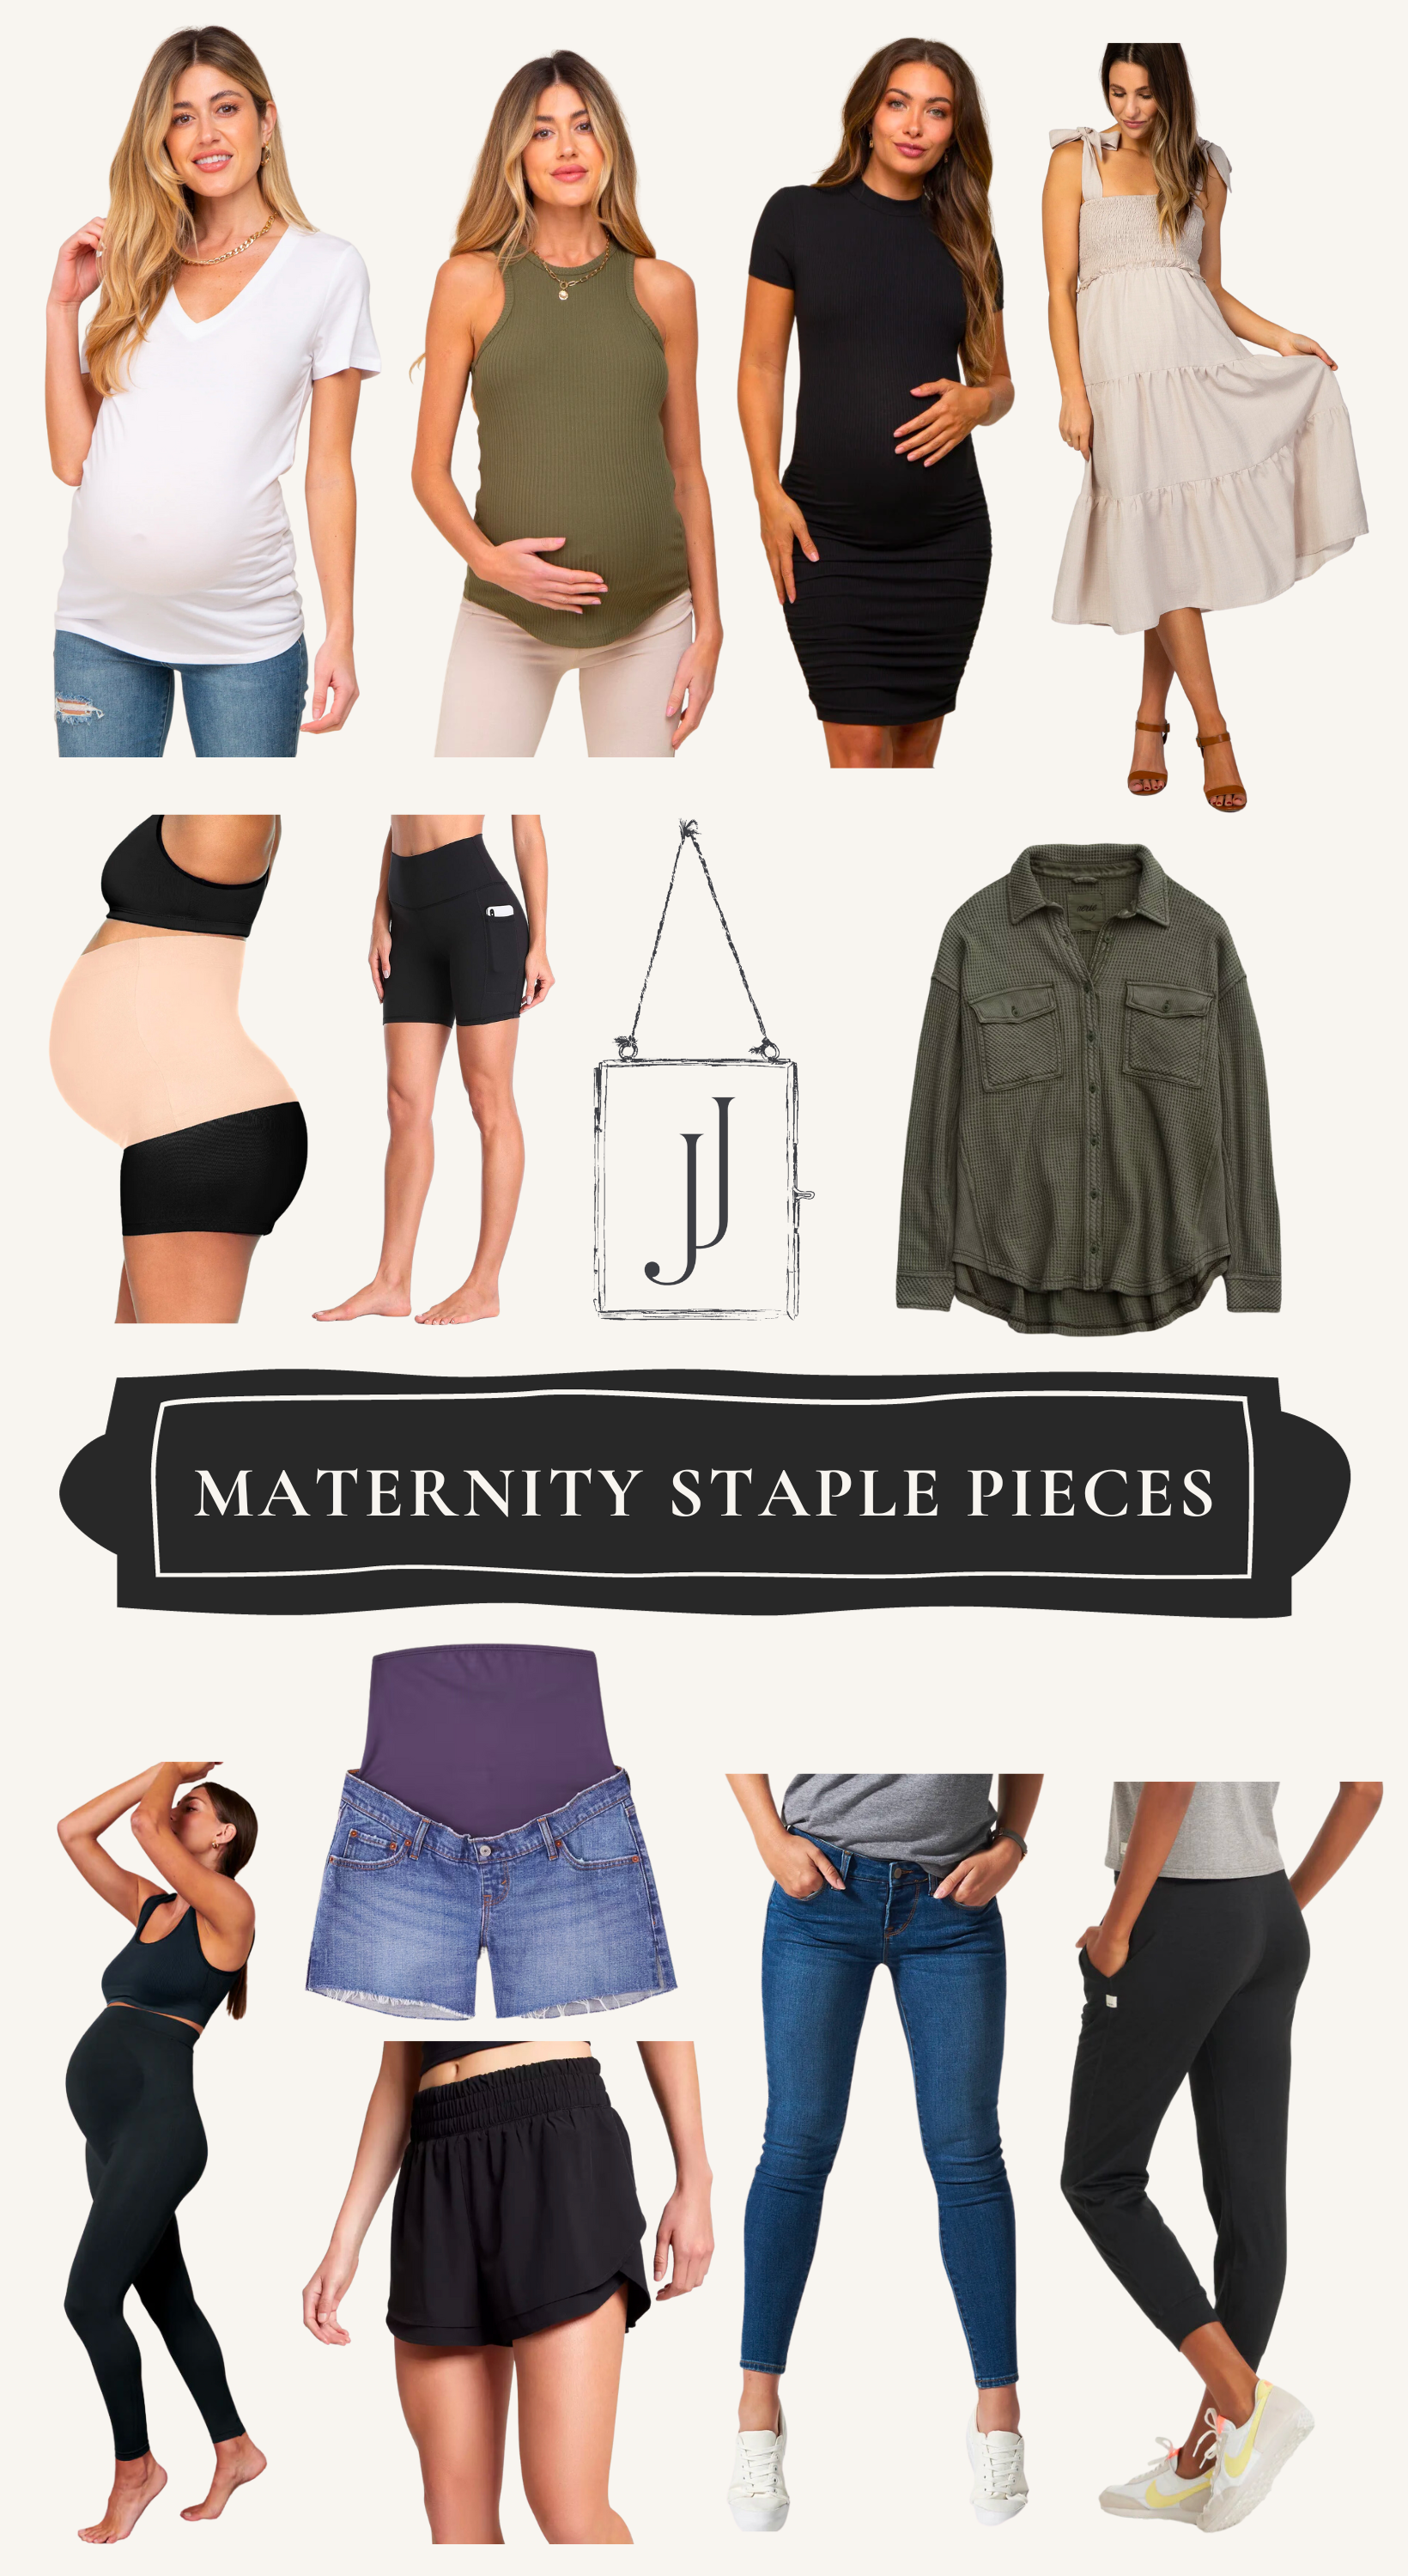 How to create a maternity capsule wardrobe